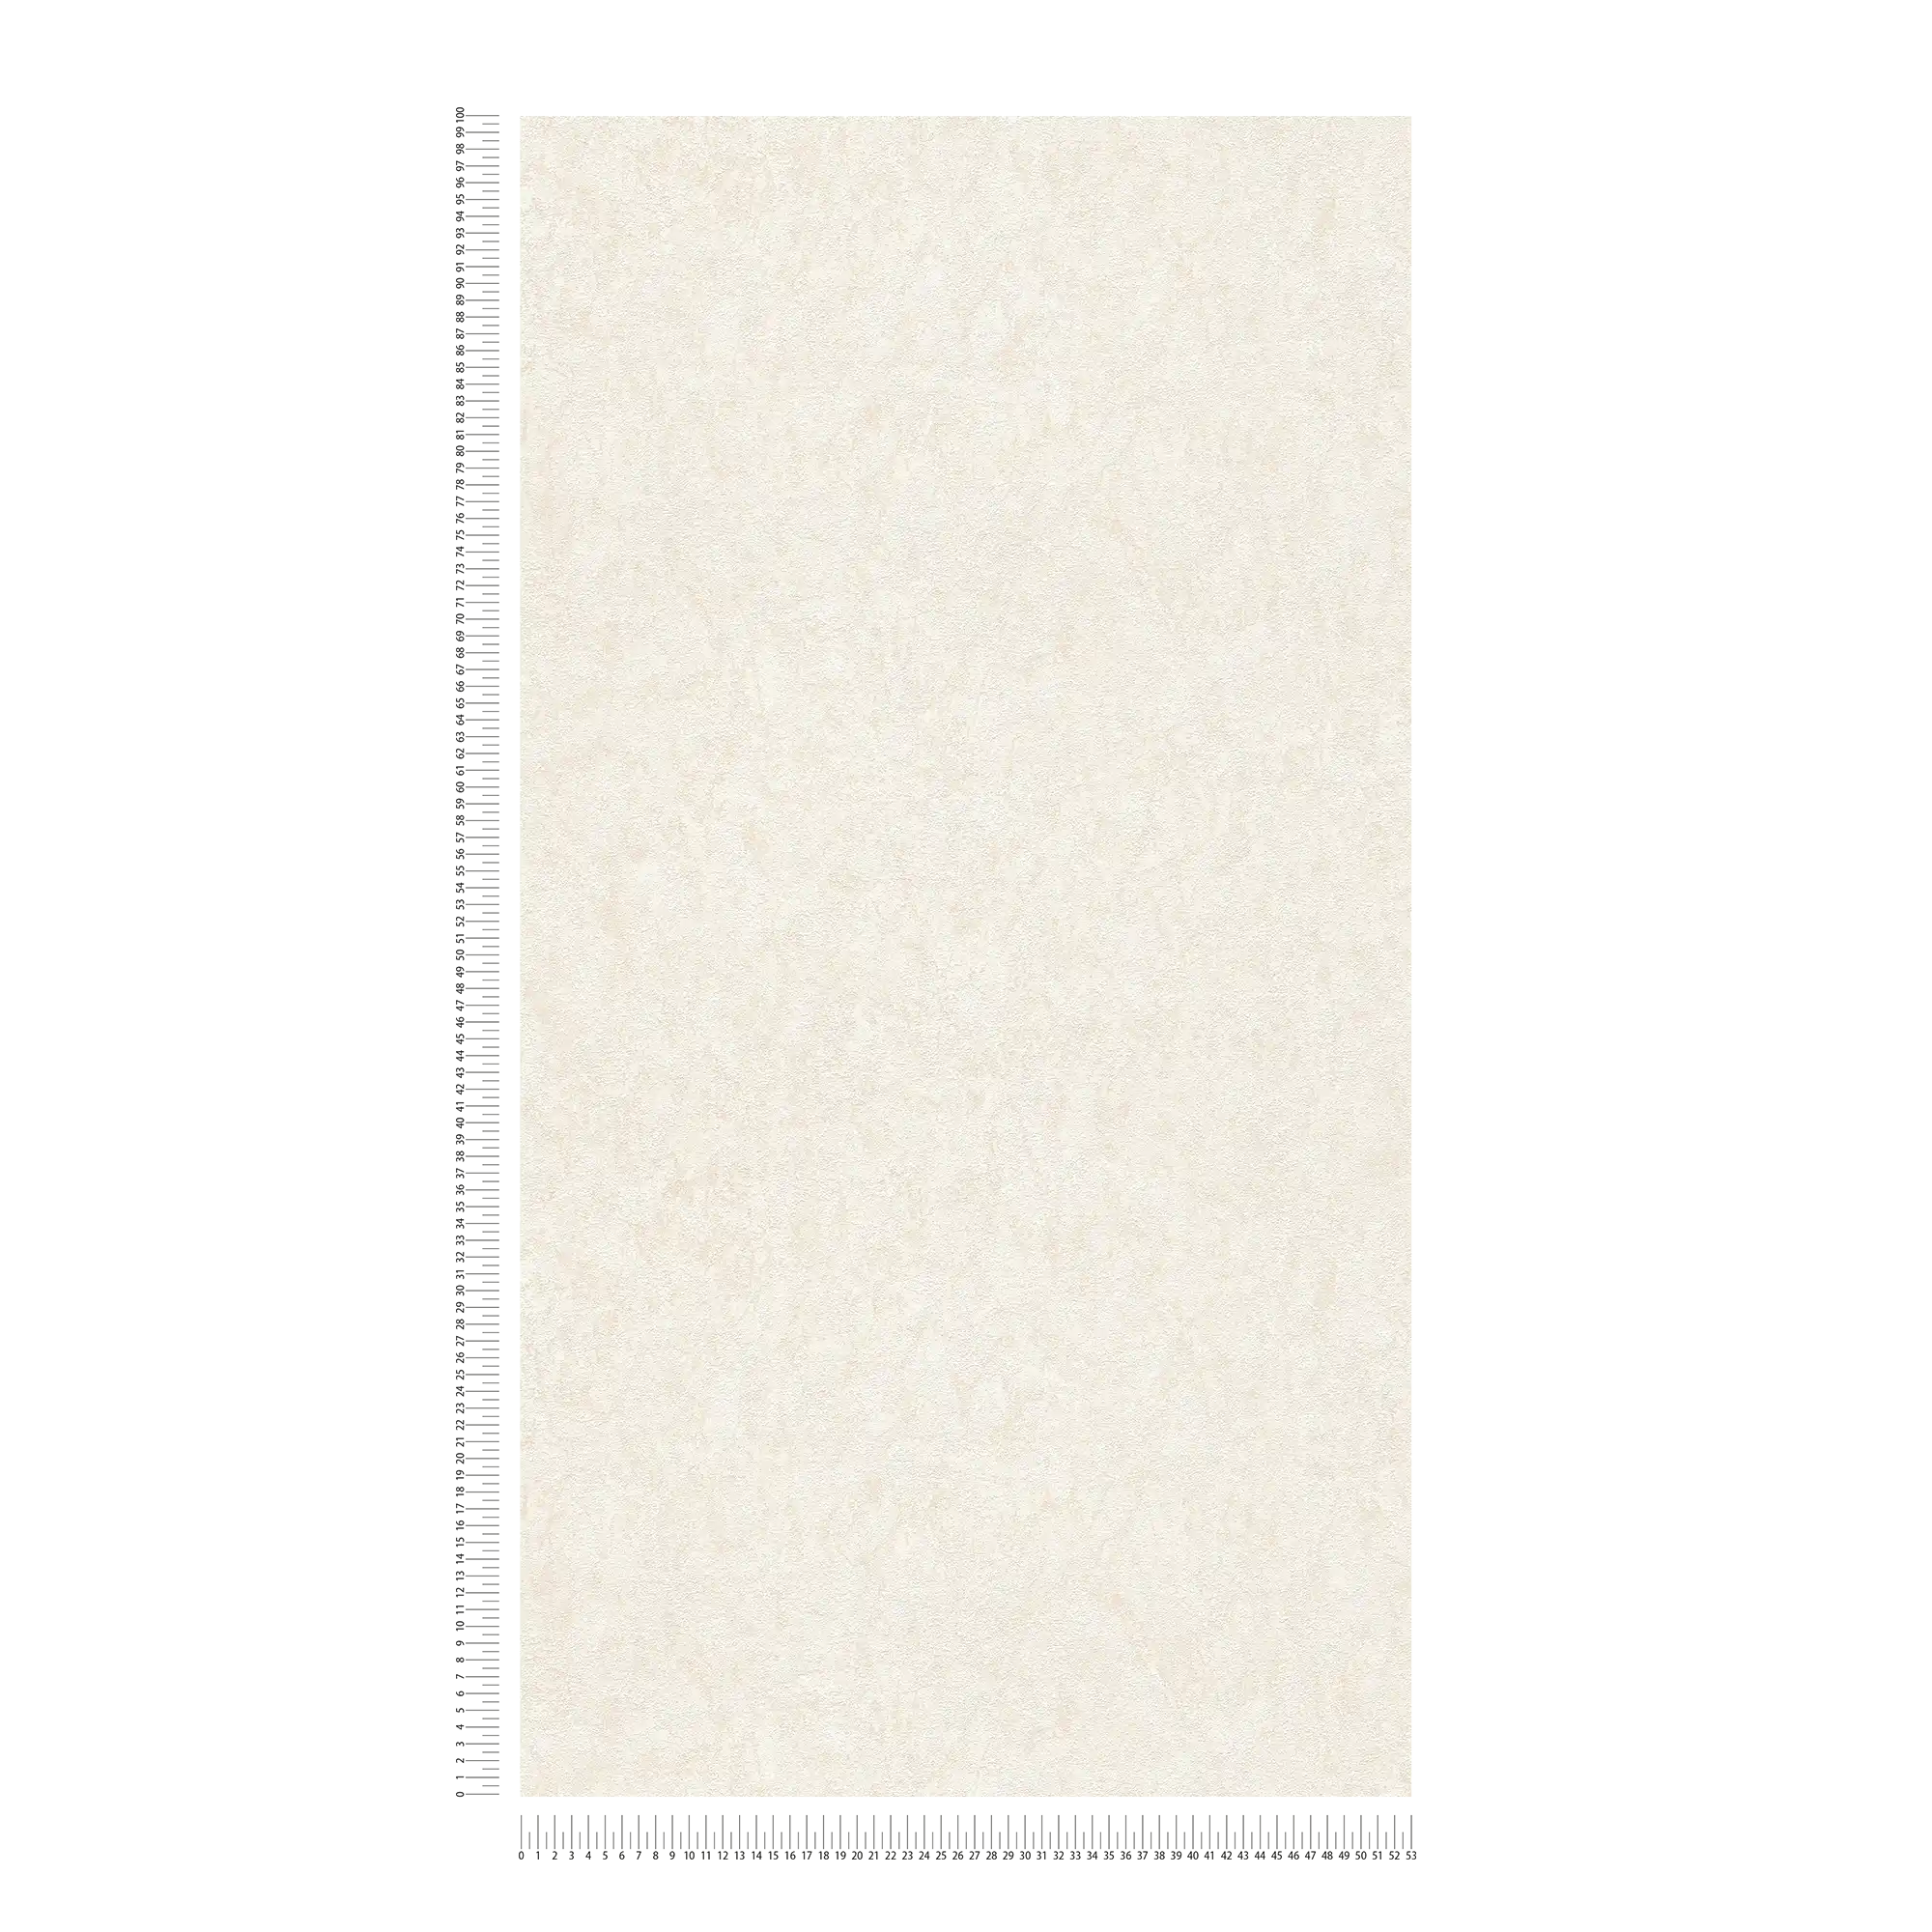             Plain wallpaper with texture effect & mottled design - cream
        